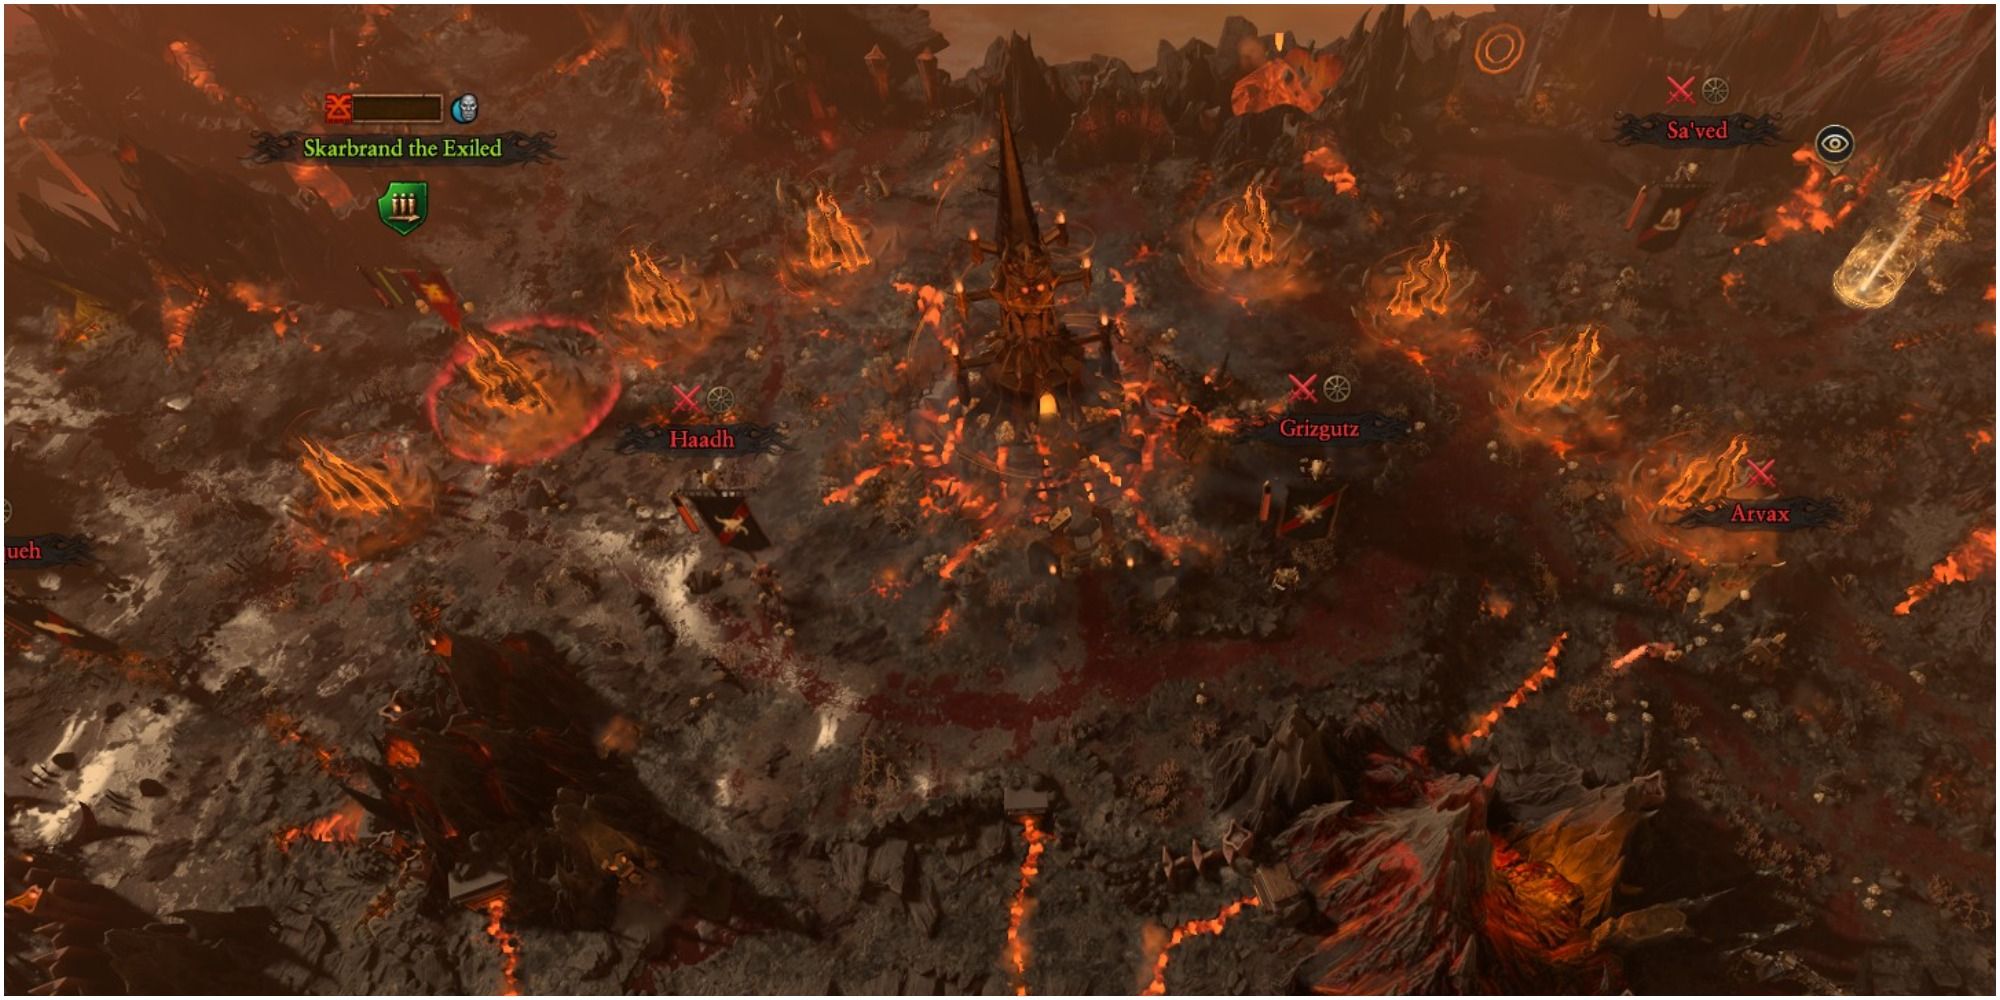 Realm of Khorne Map In Total War Warhammer 3